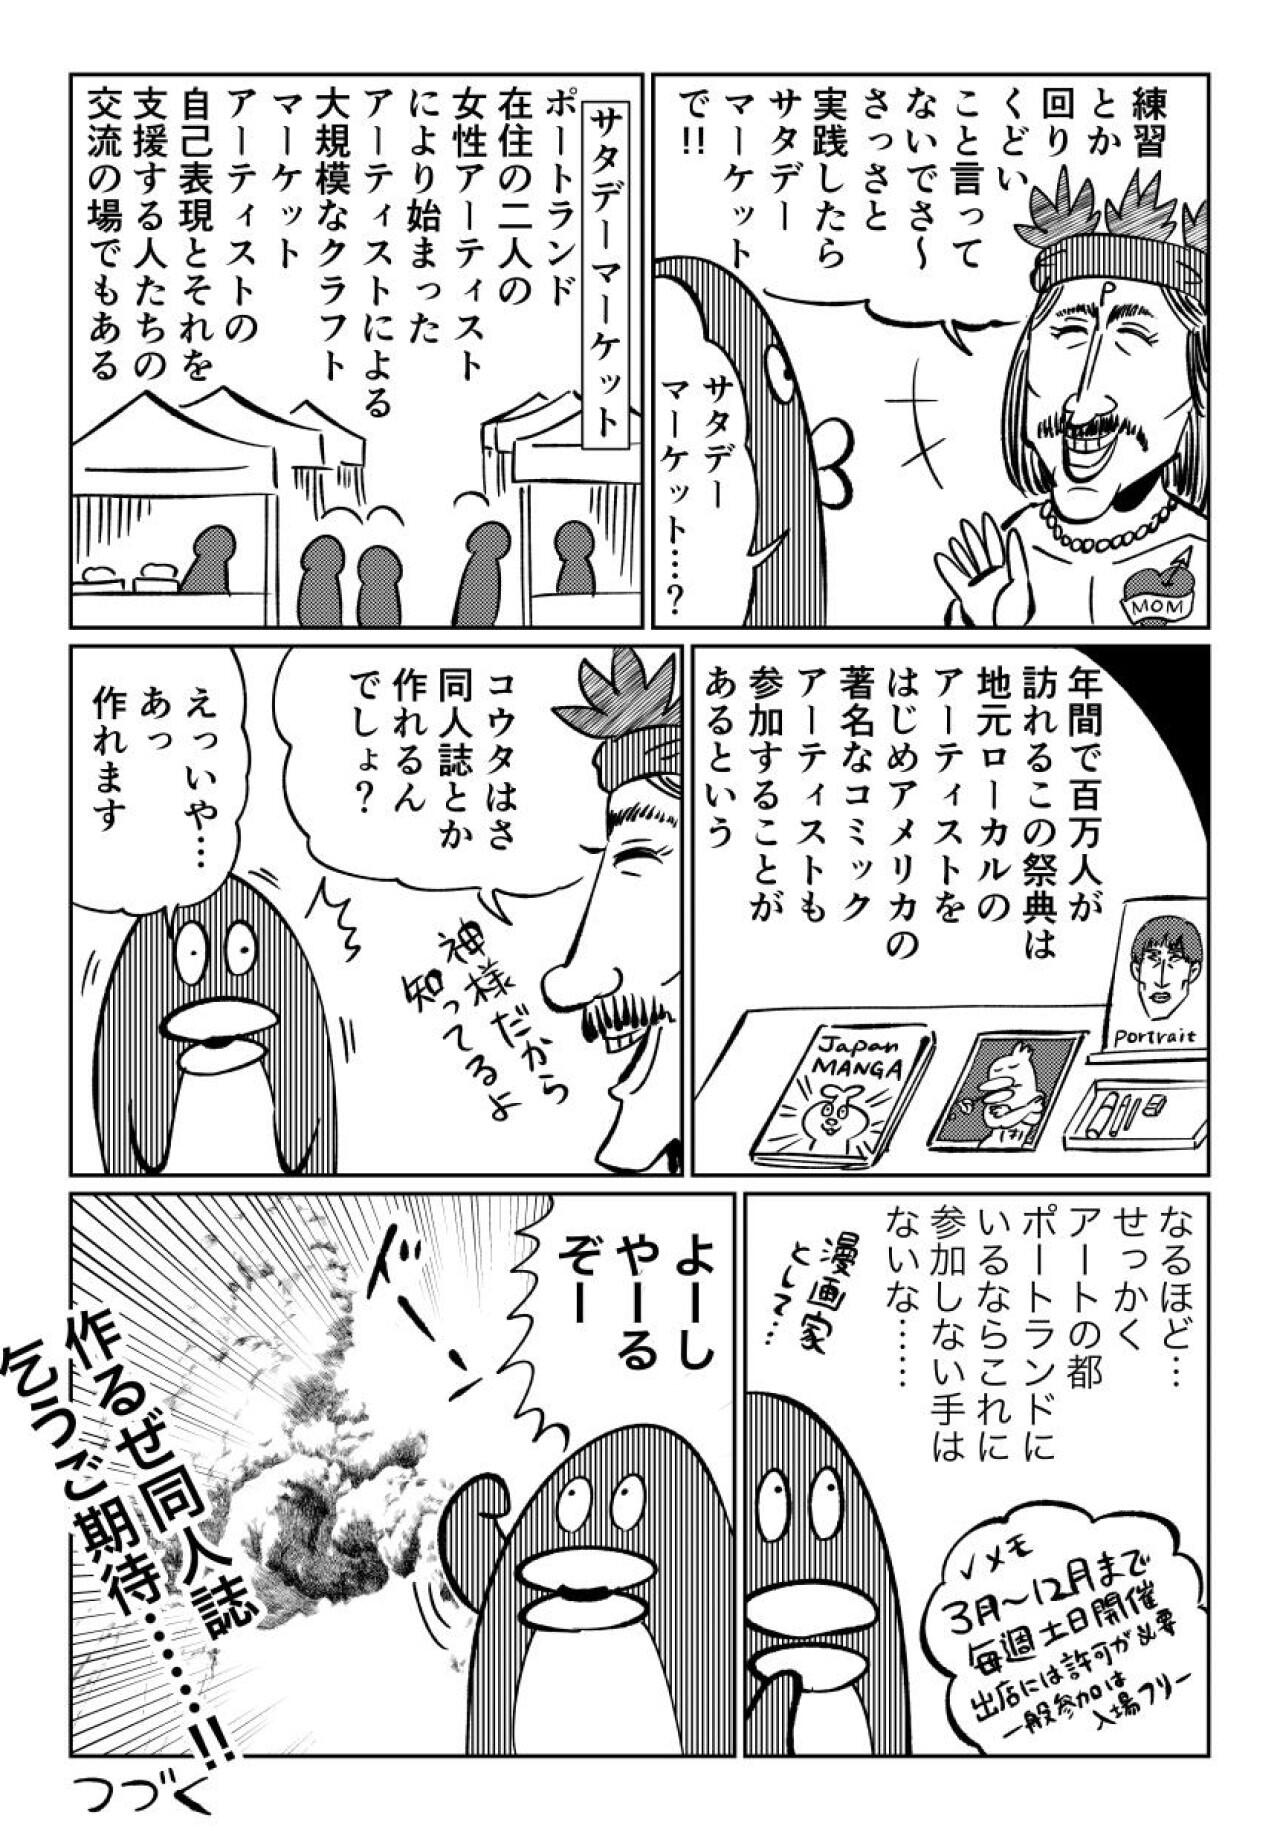 https://www.ryugaku.co.jp/column/images/34sai13_4_1280.jpg